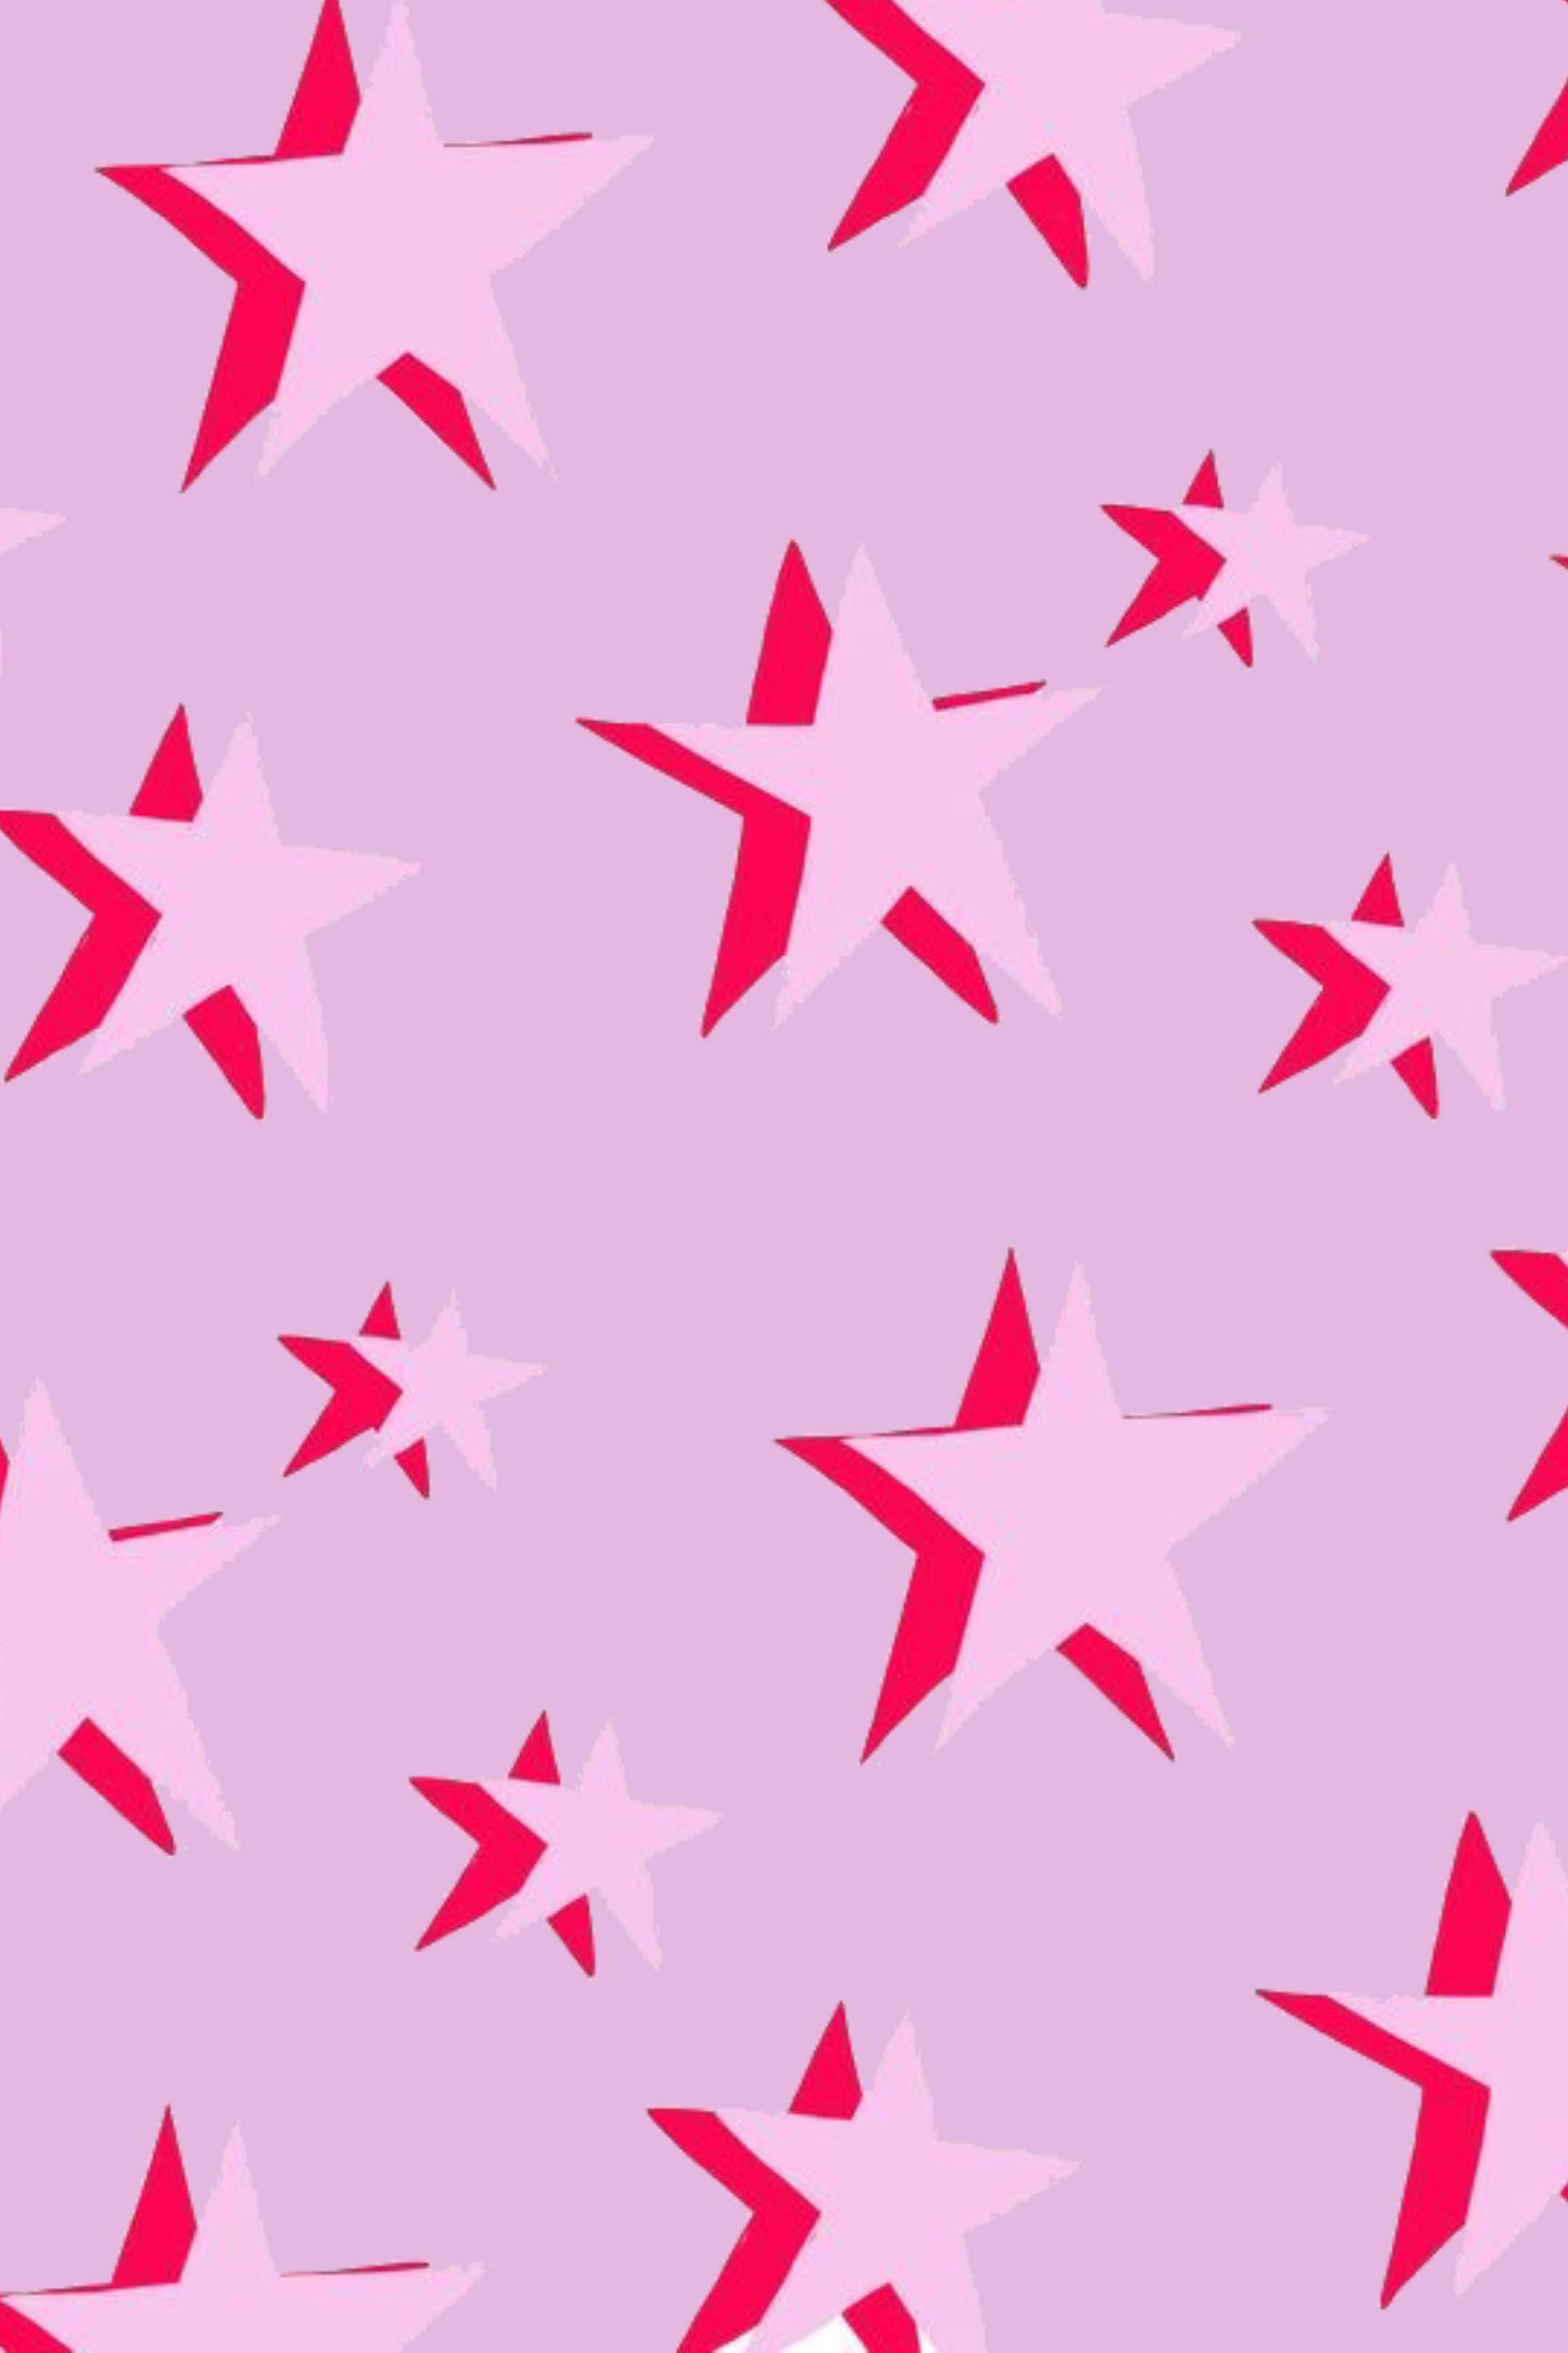 Preppy Pink Wallpaper